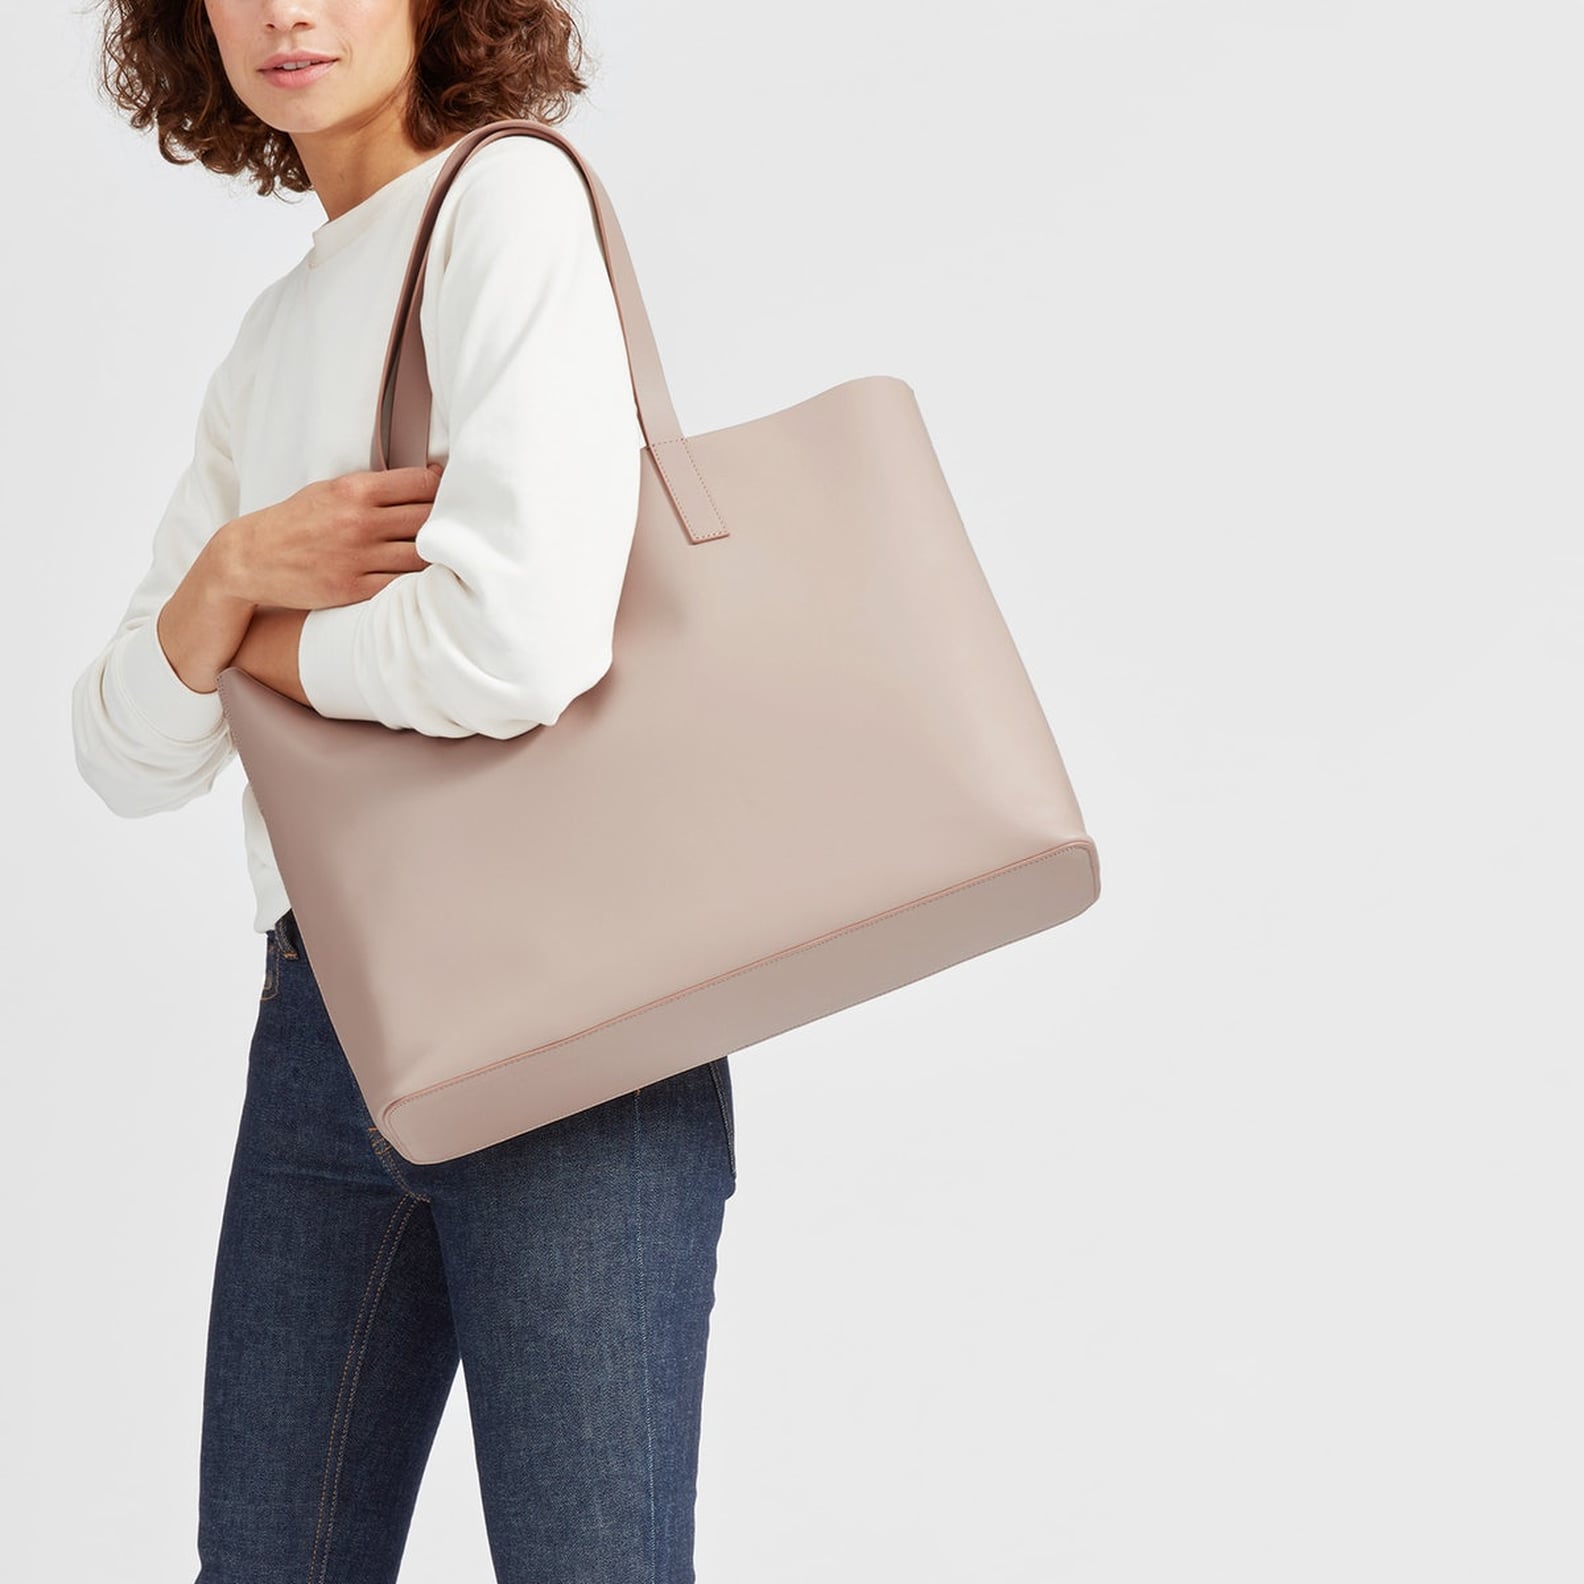 Cute Work Bags 2018 | POPSUGAR Fashion